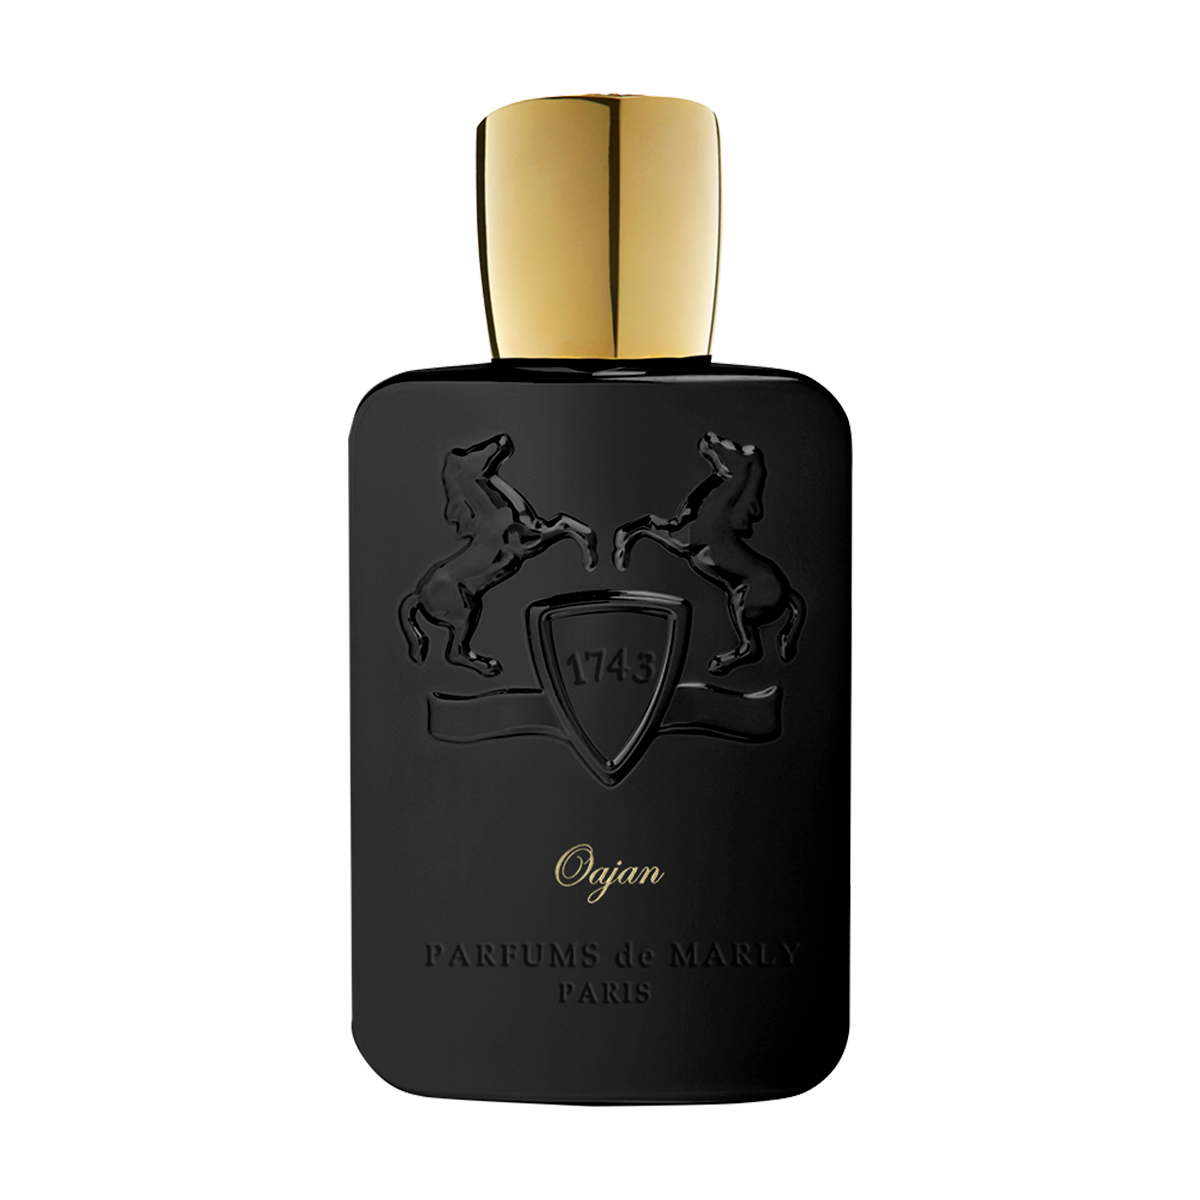 Oajan - Parfums De Marly - EDP 125ml